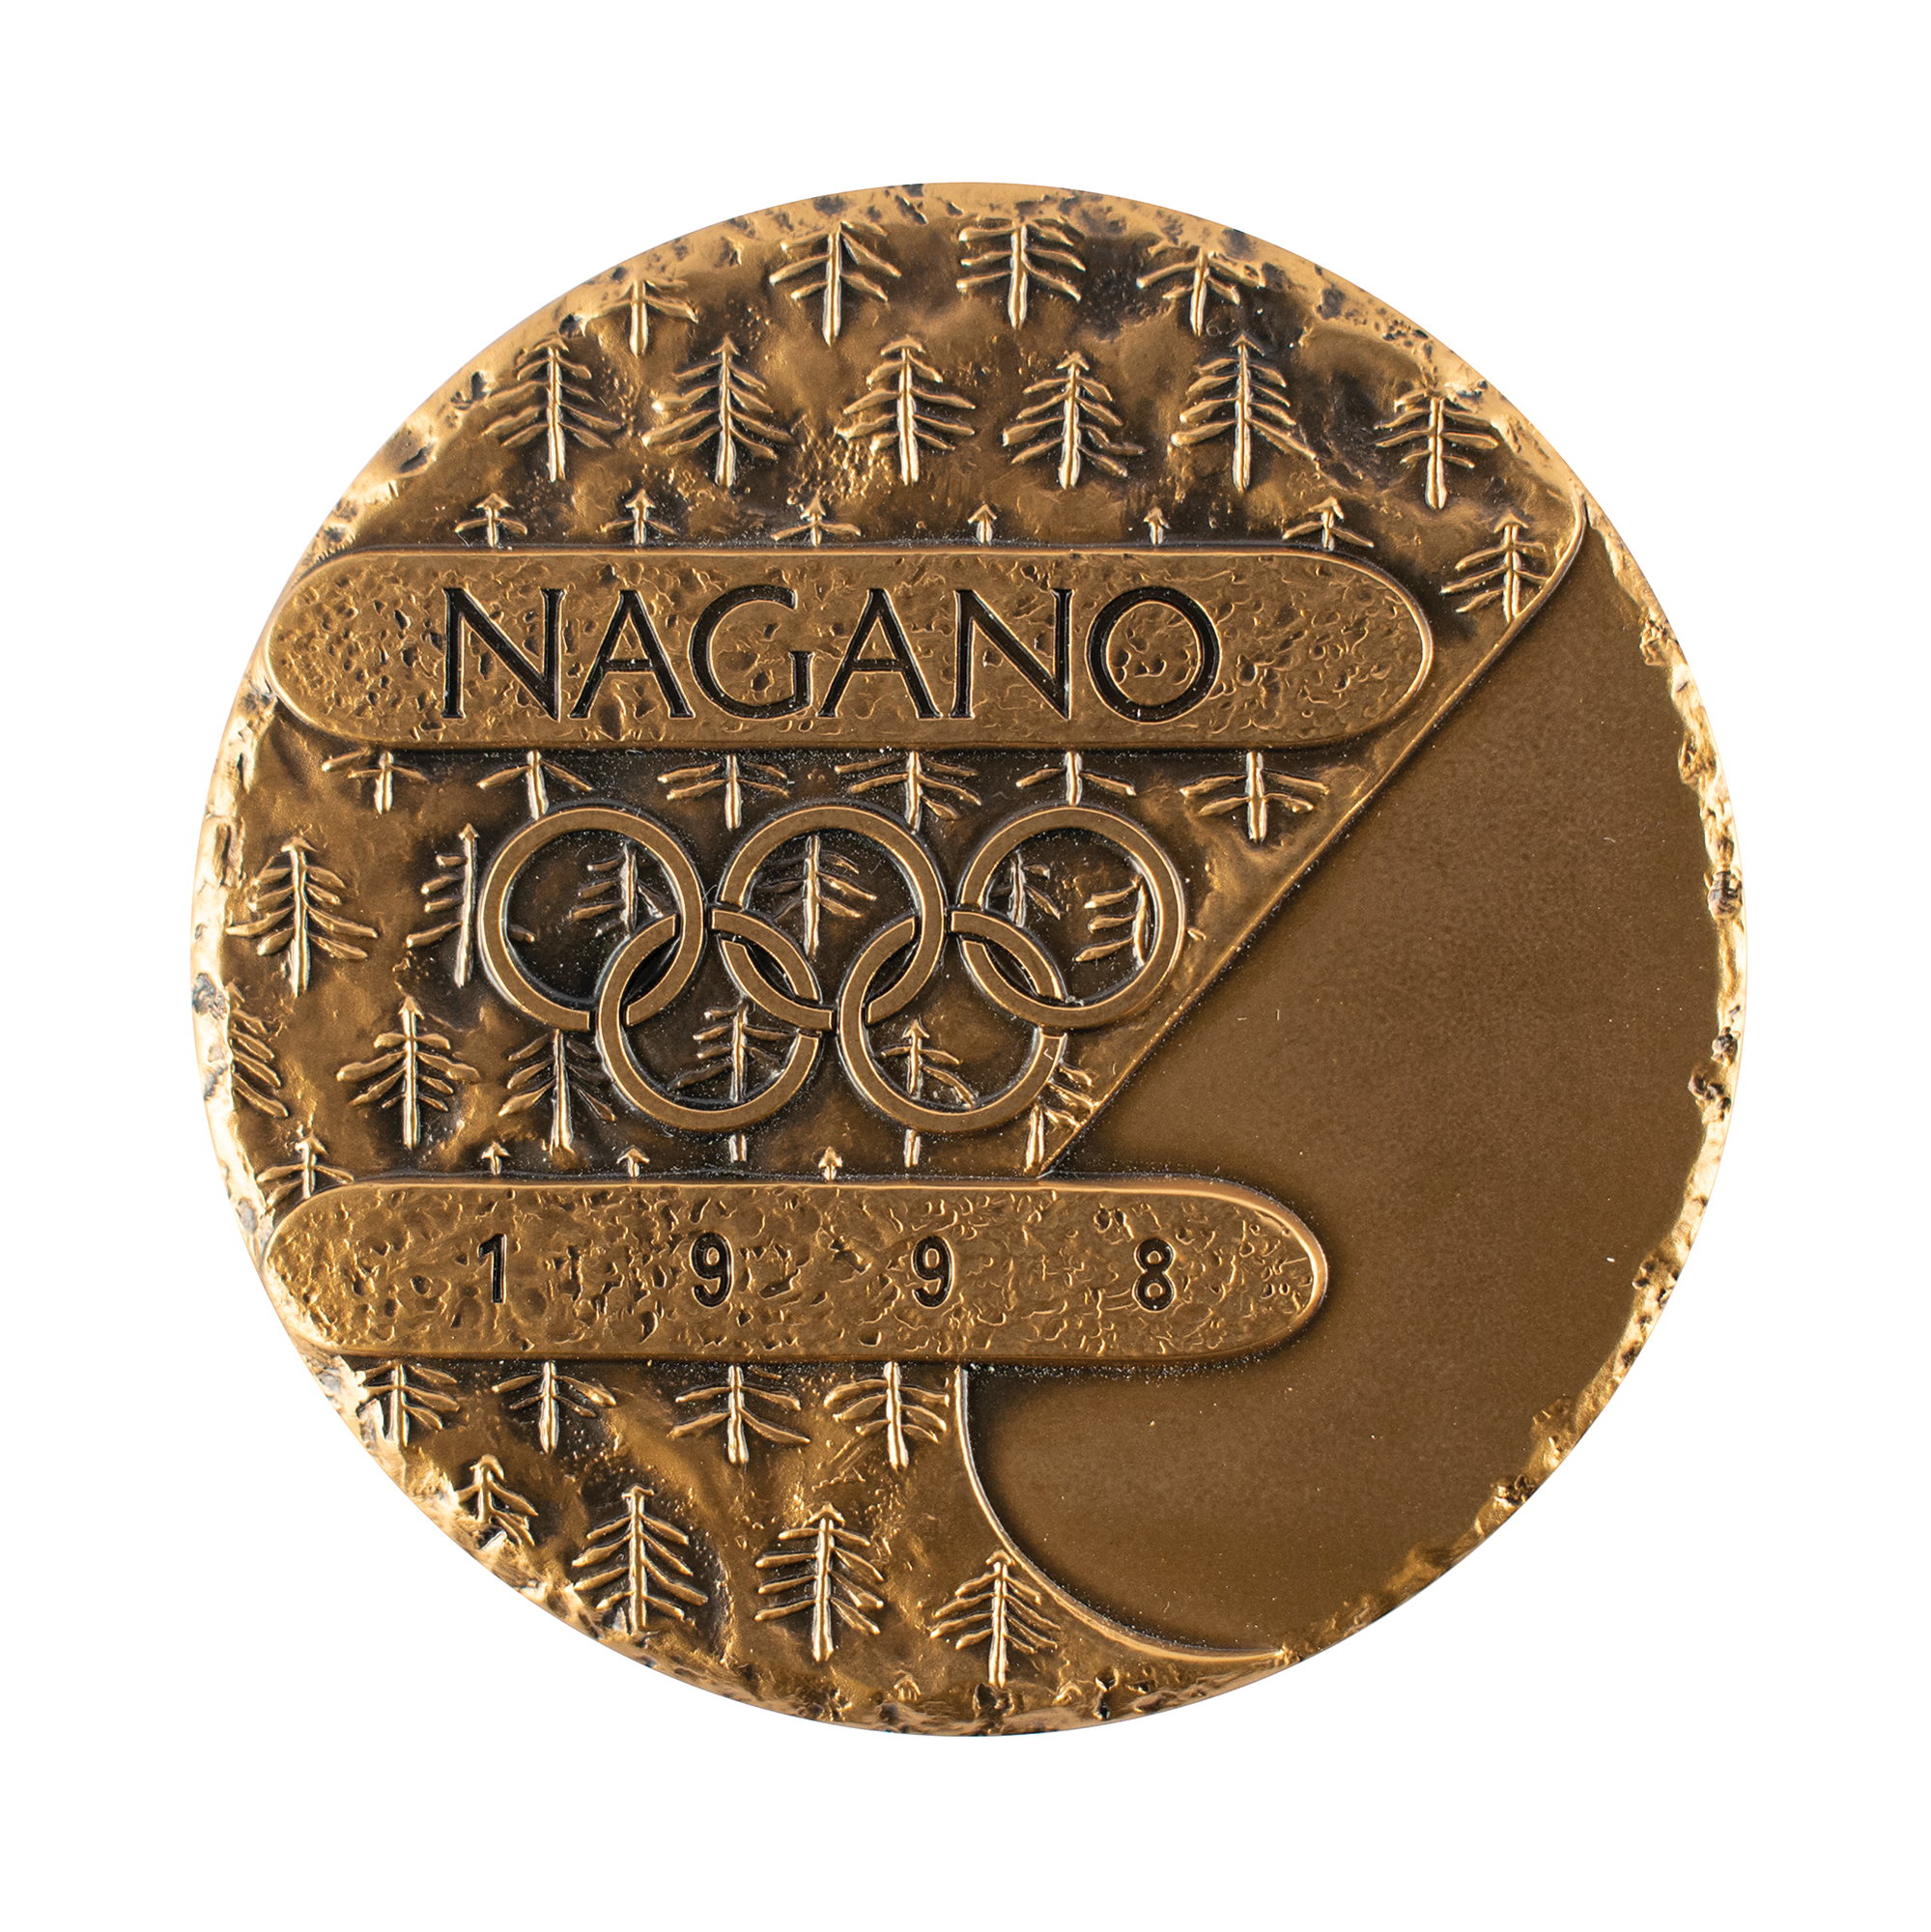 Lot #6155 Nagano 1998 Winter Olympics Participation Medal